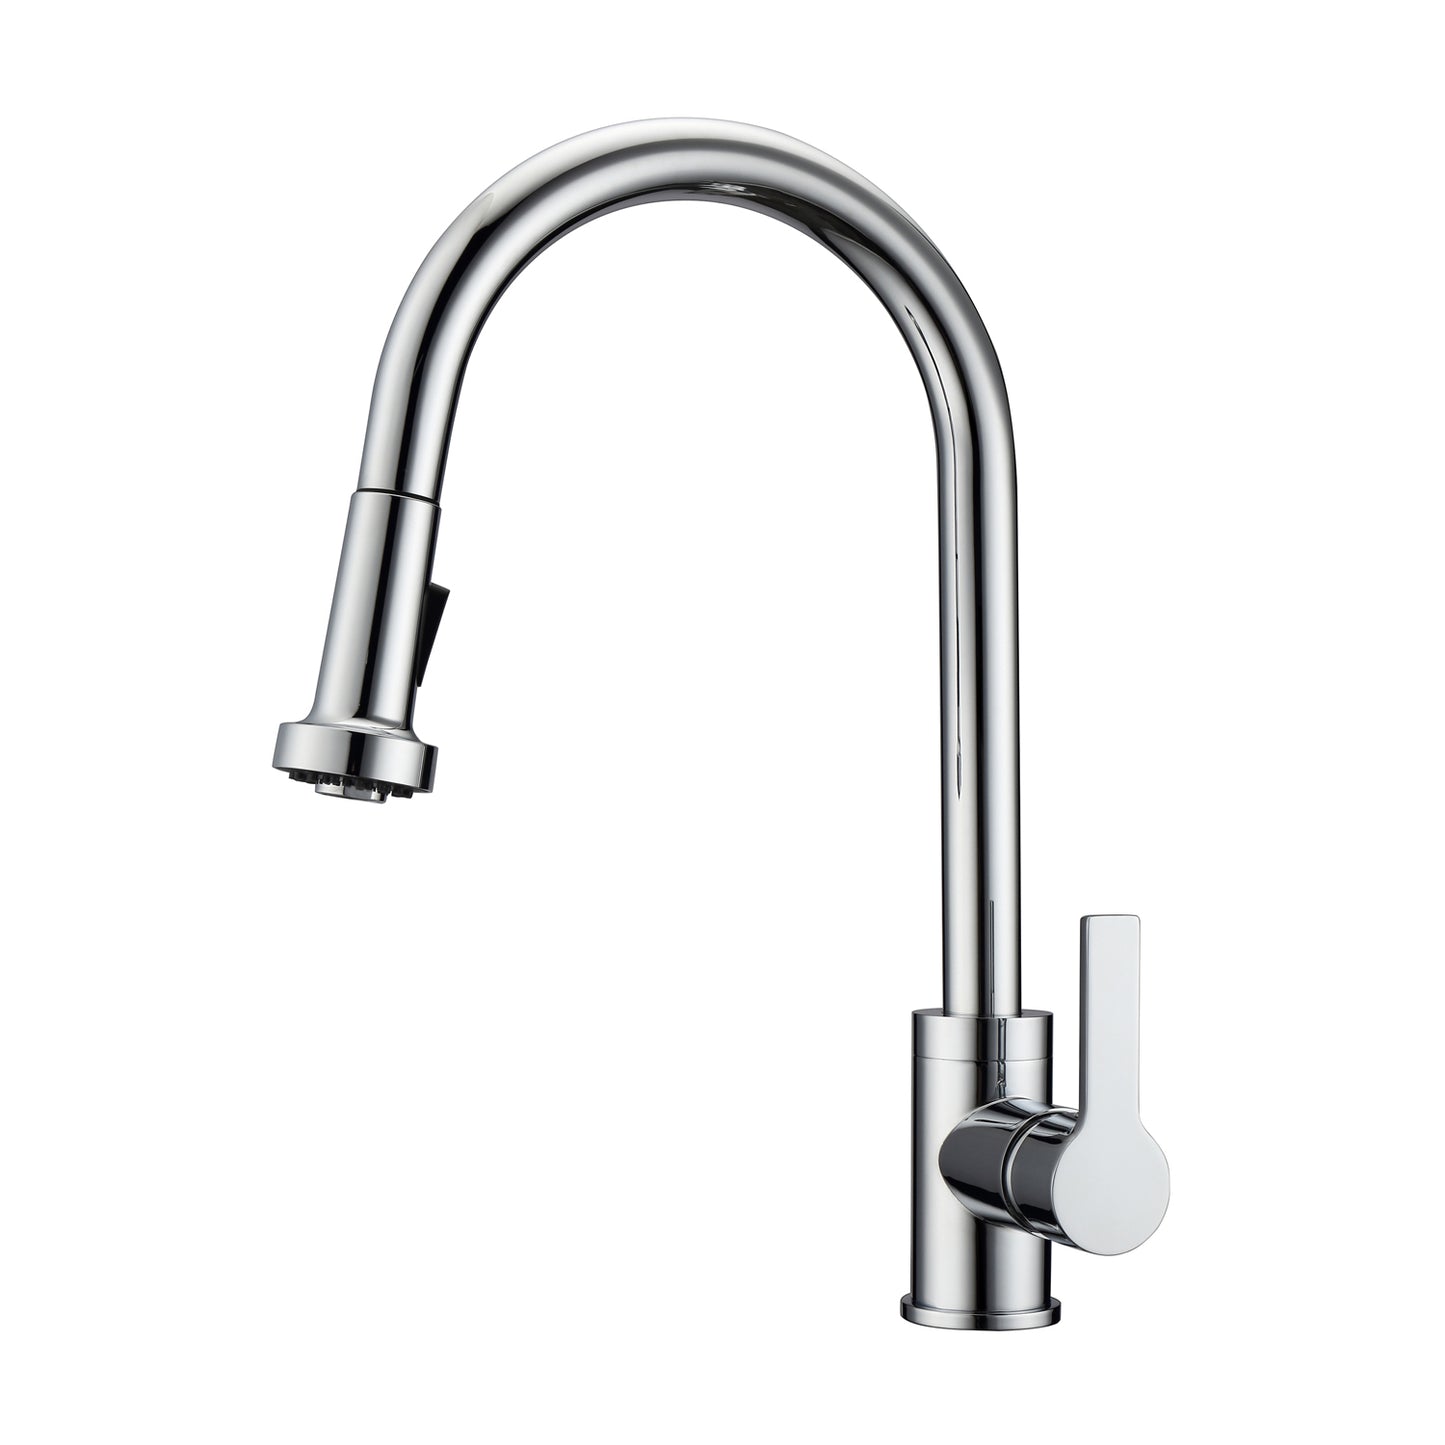 Fairchild 2 Kitchen Faucet, Pull-Out Sprayer, Single Lever Handle, Chrome